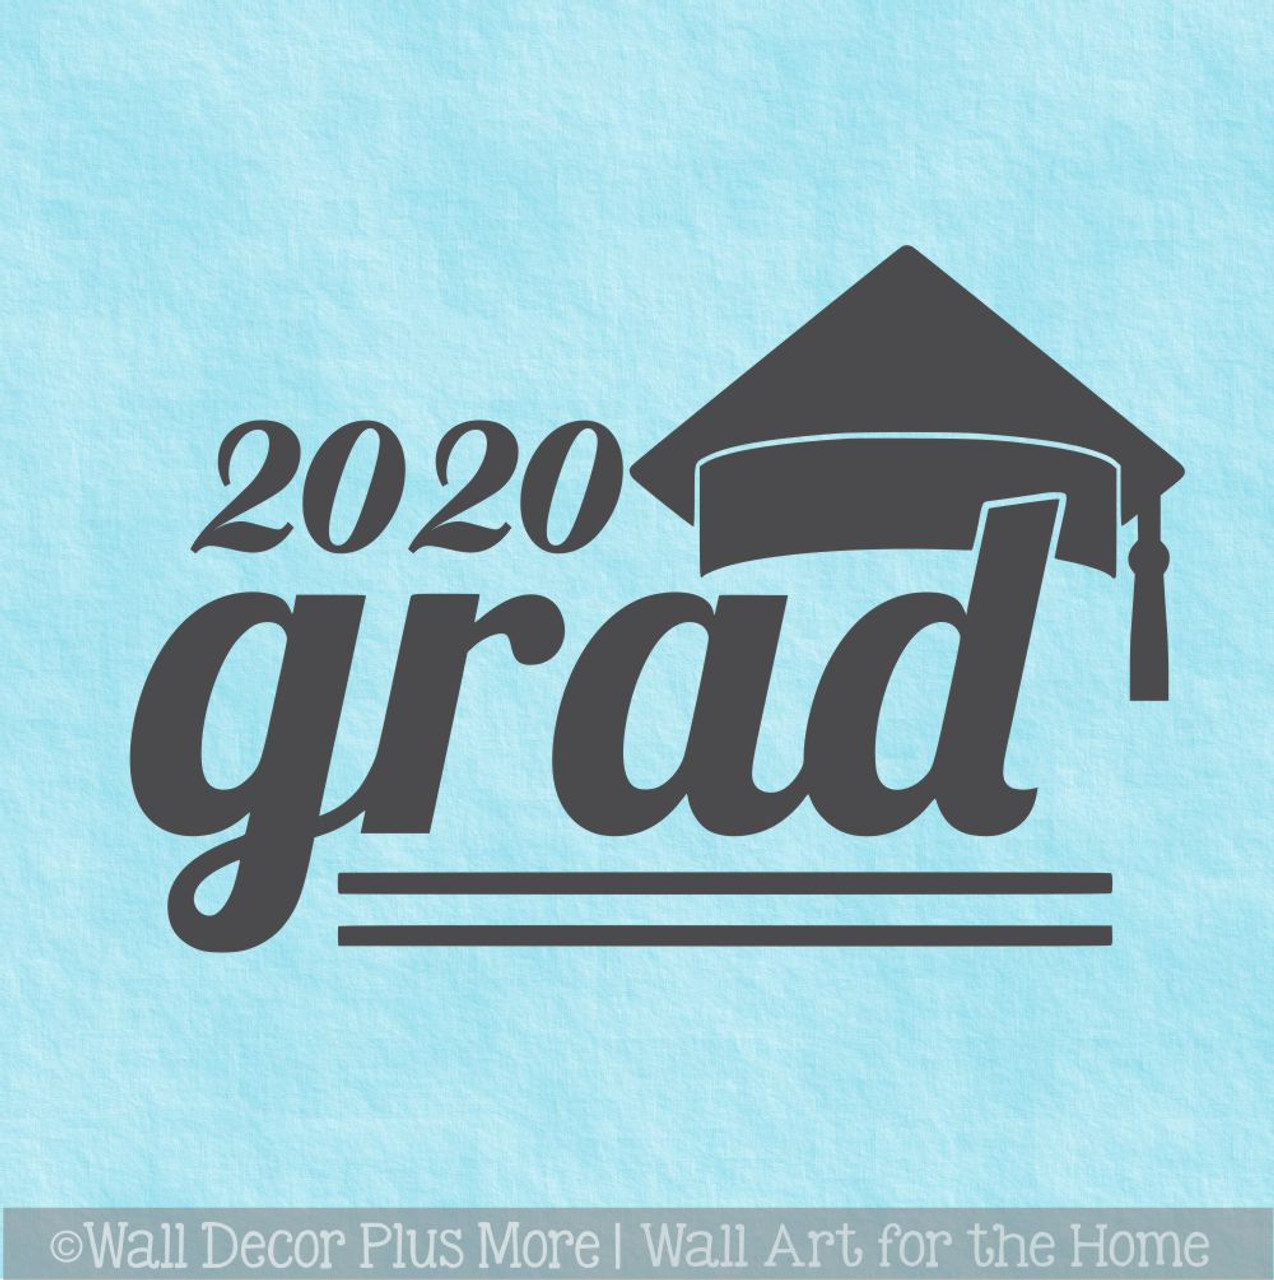 Graduation Hat Decoration Vinyl Decal Sticker for Graduate Mortarboard